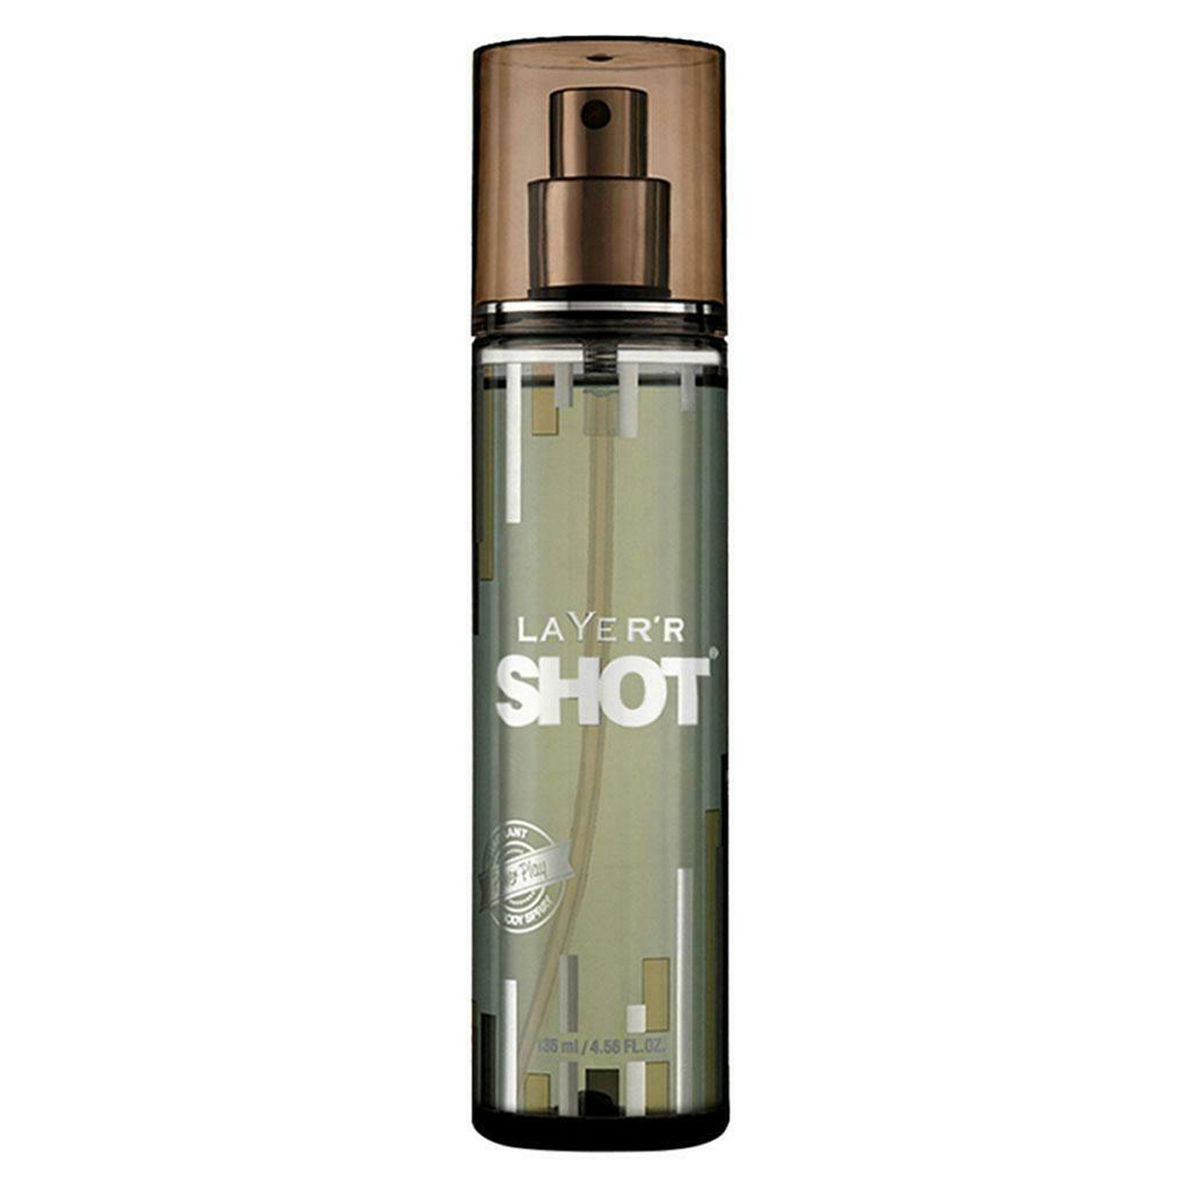 Buy Layer'r Shot Power Play Deodorant Body Spary, 135 ml Online